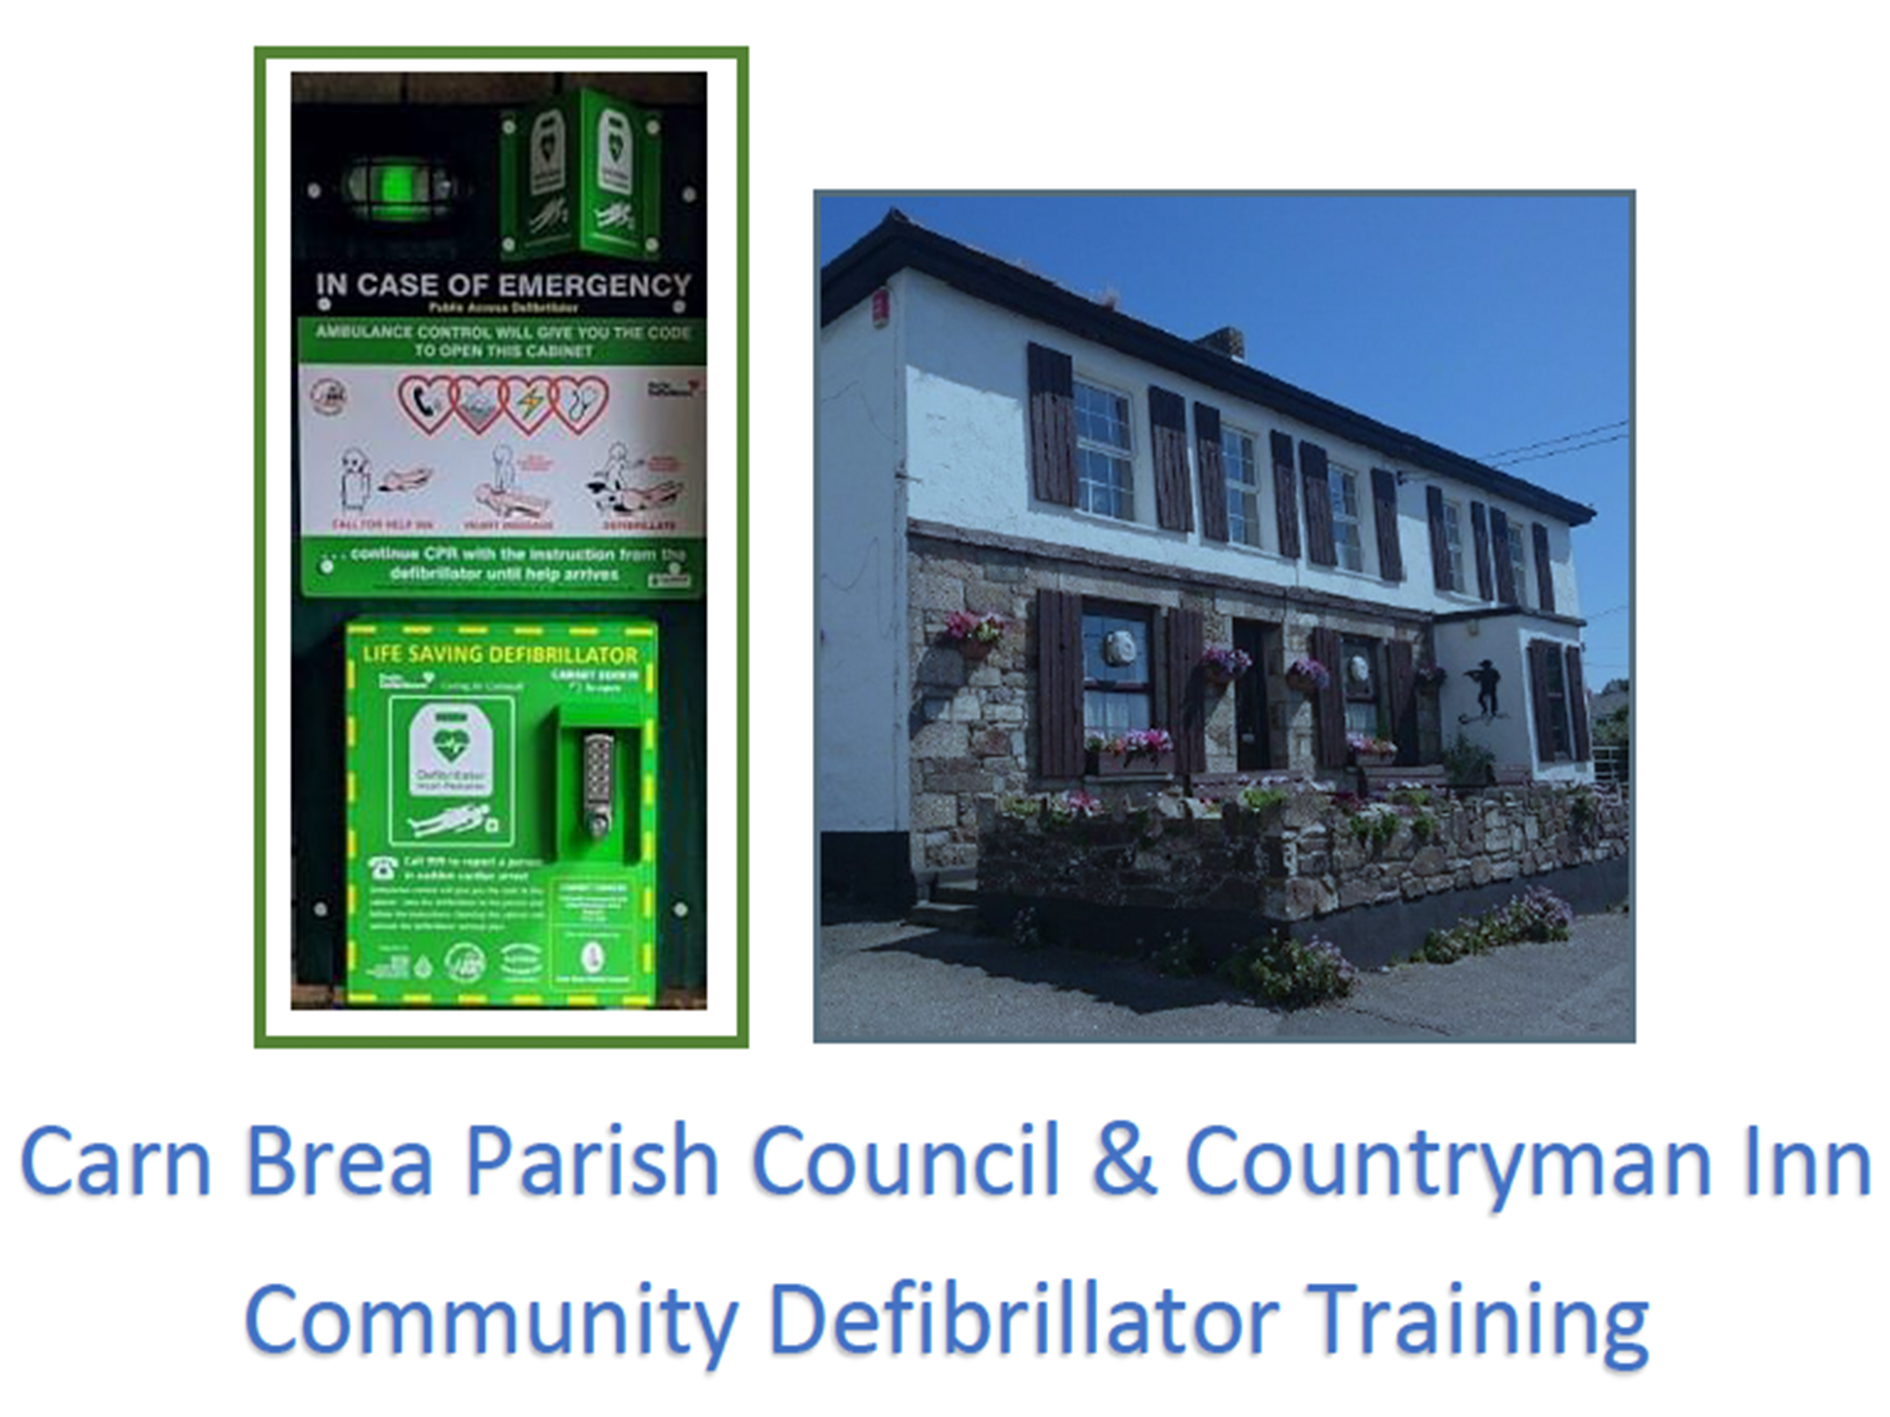 Community Defibrillator Training